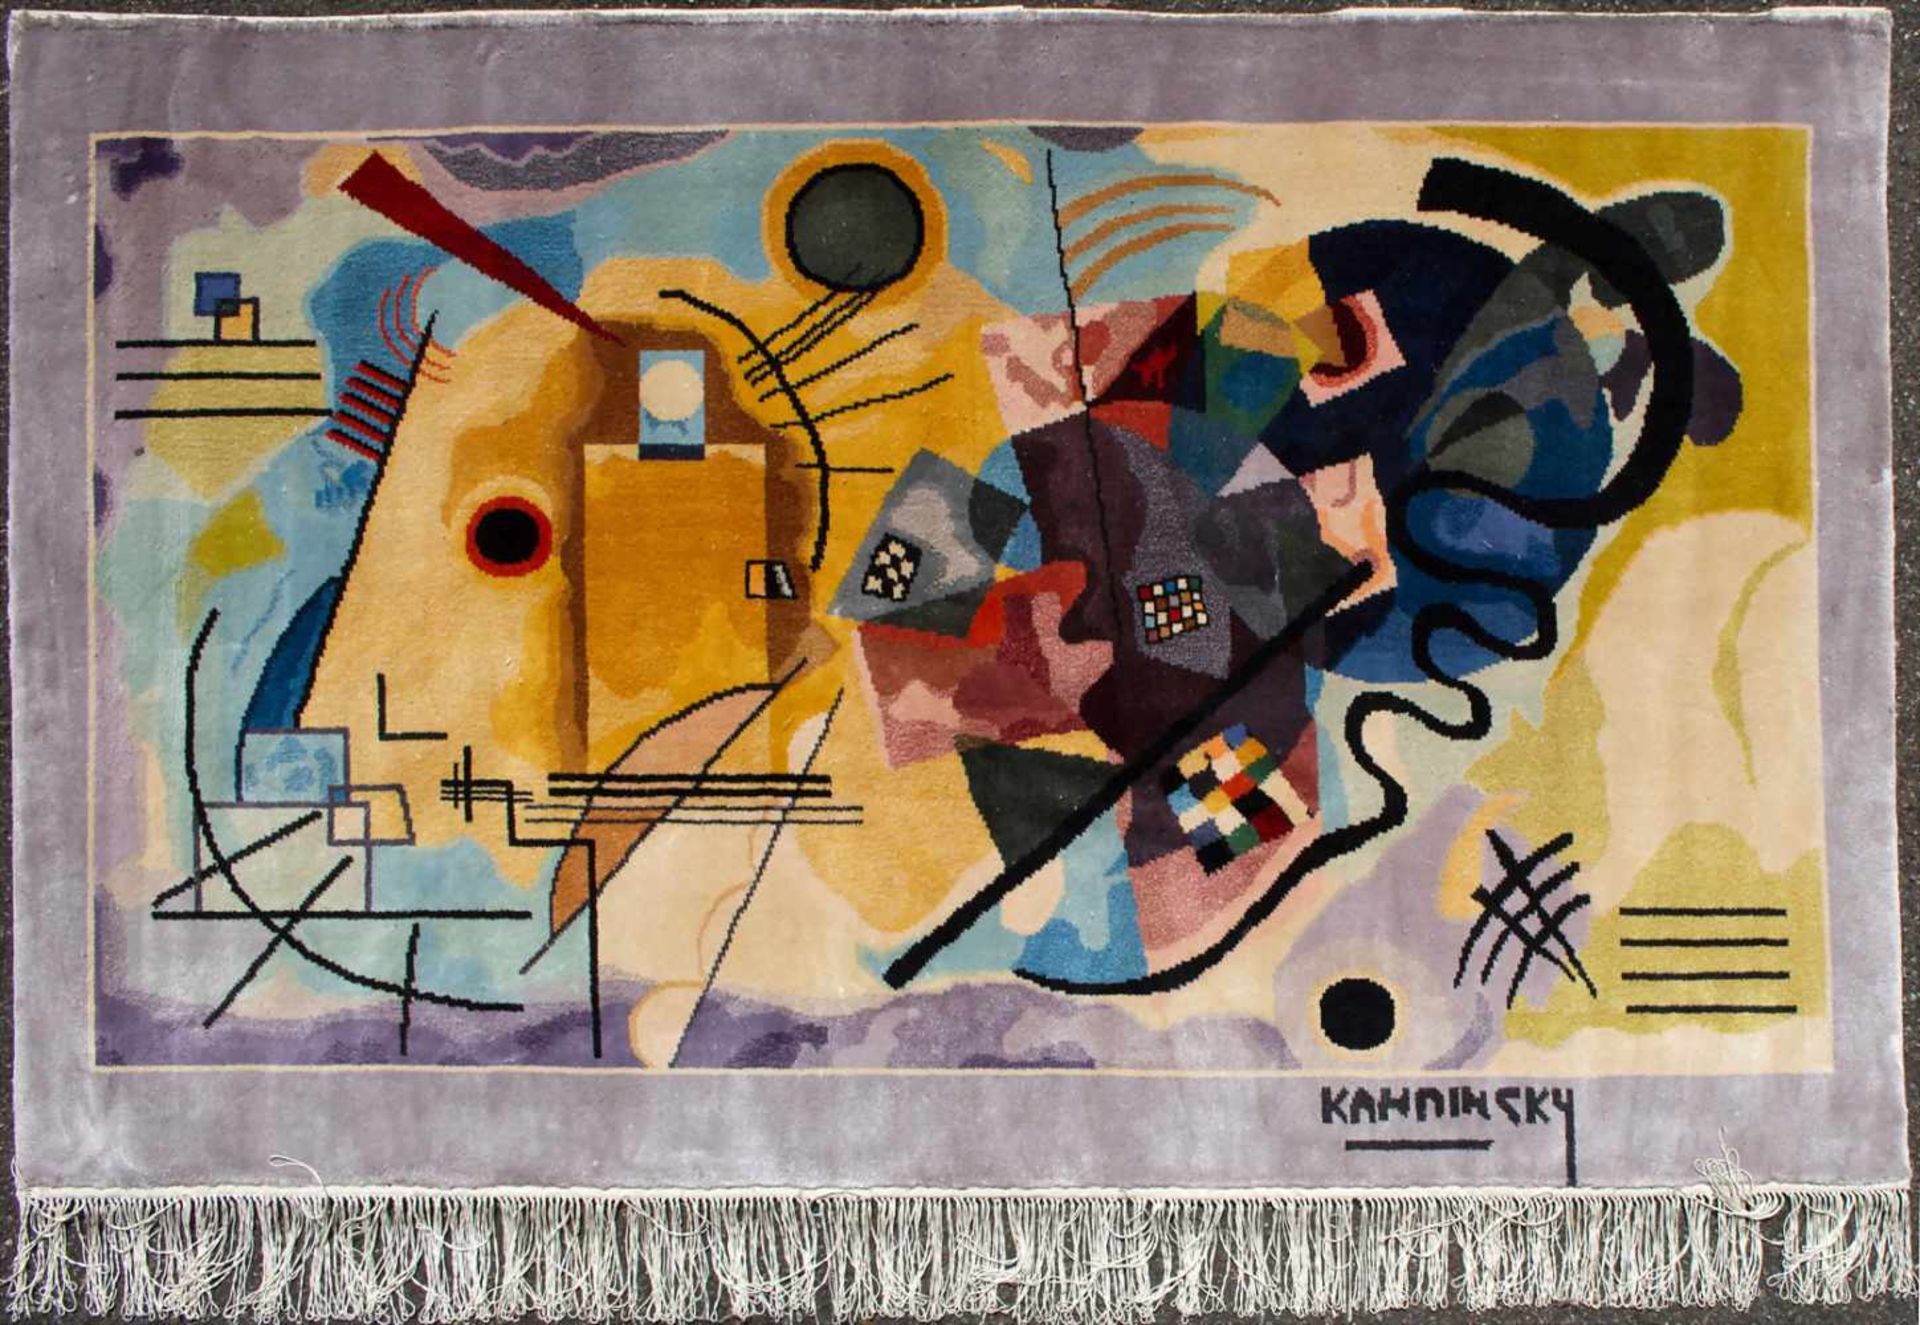 Seidenteppich 'Kandinsky' / A silk carpet 'Kandinsky'Material: Seide auf Seide,Maße: 151 x 93 cm, - Image 3 of 3